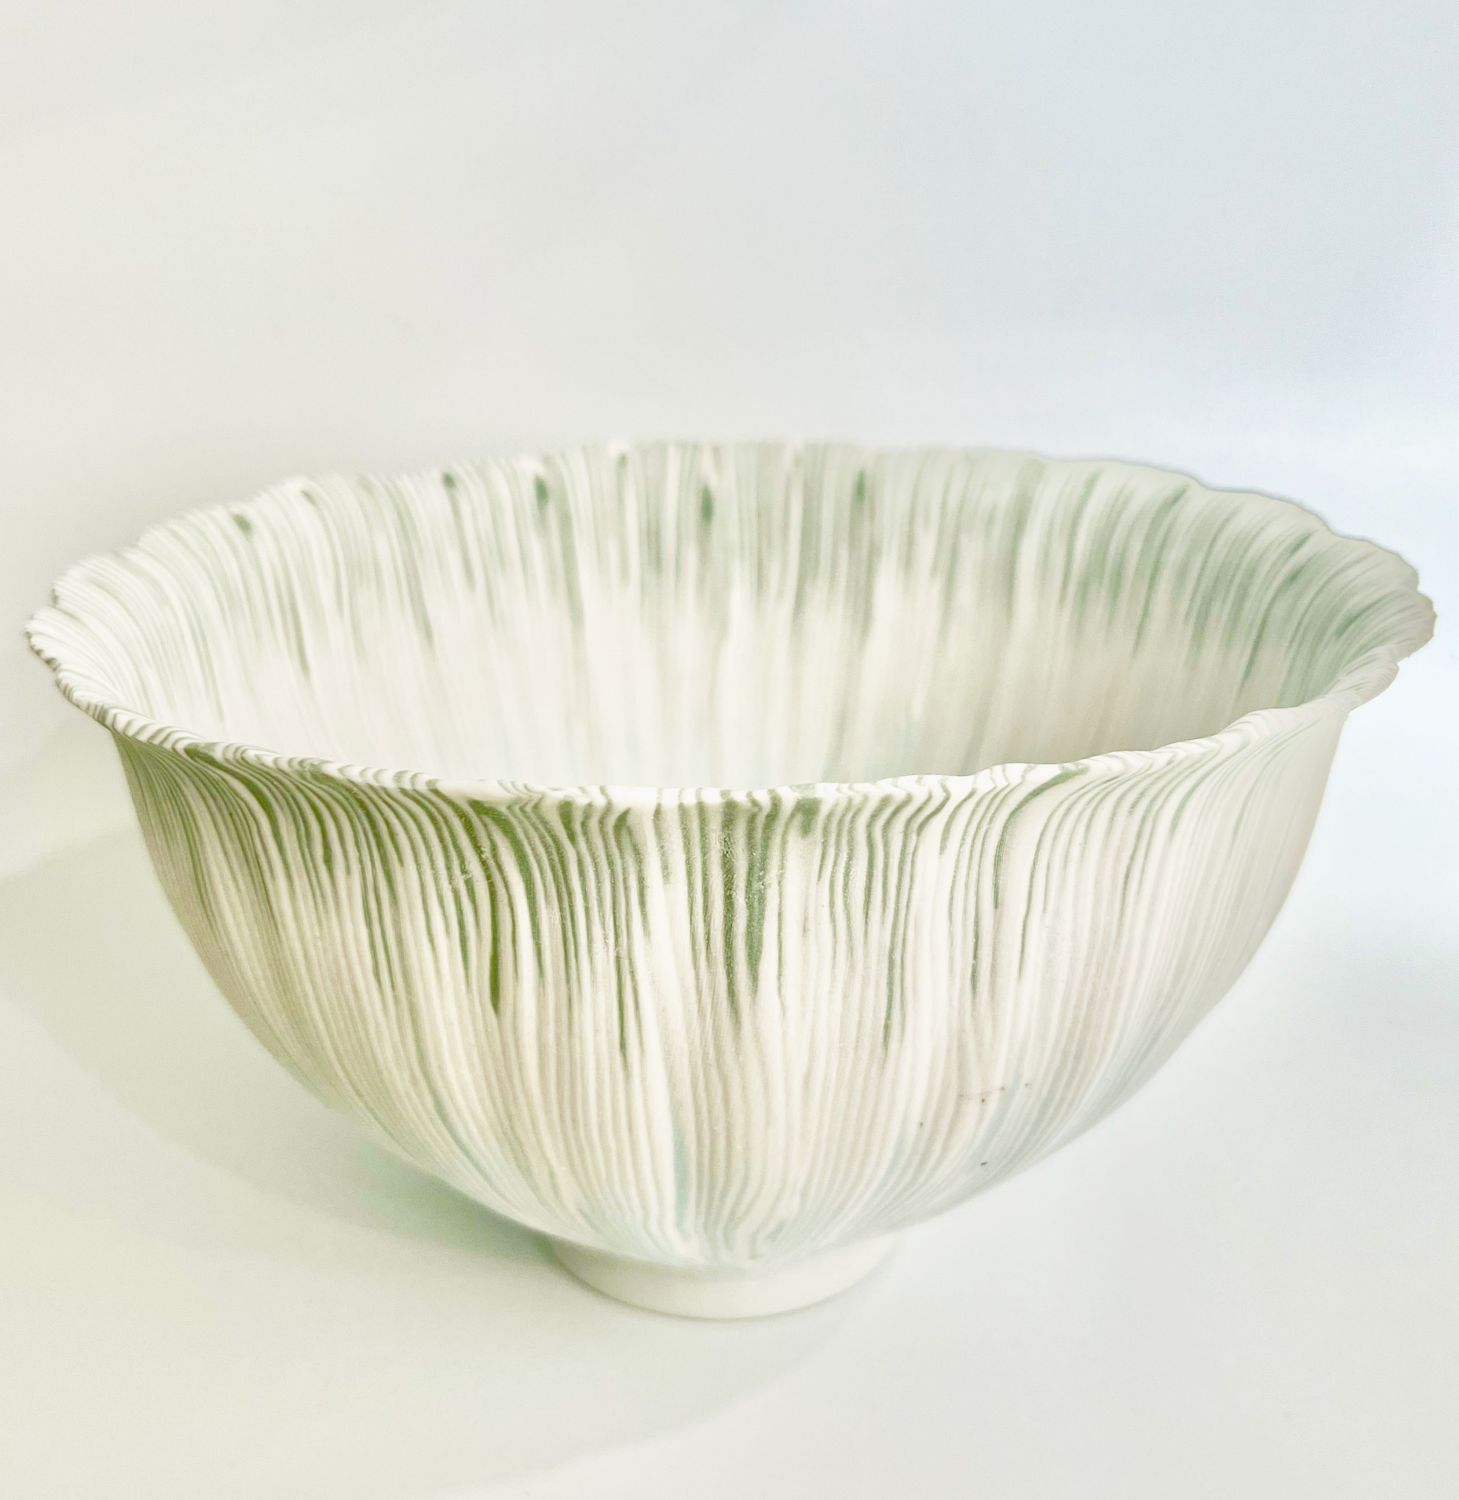 Eiko Maeda: Green and White Bowl Product Image 1 of 3